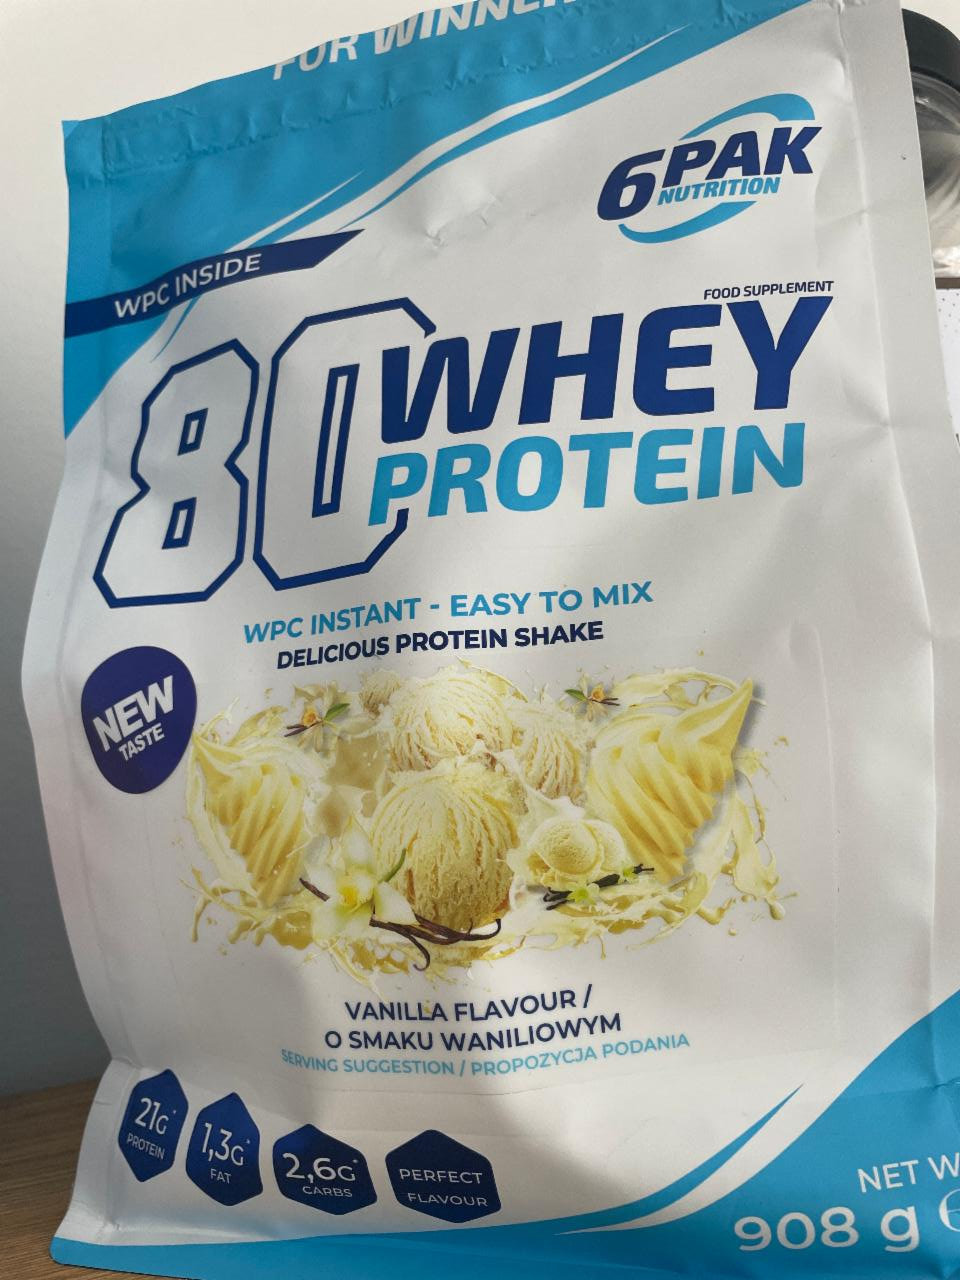 Fotografie - 80 Whey protein vanilla 6PAK Nutrition